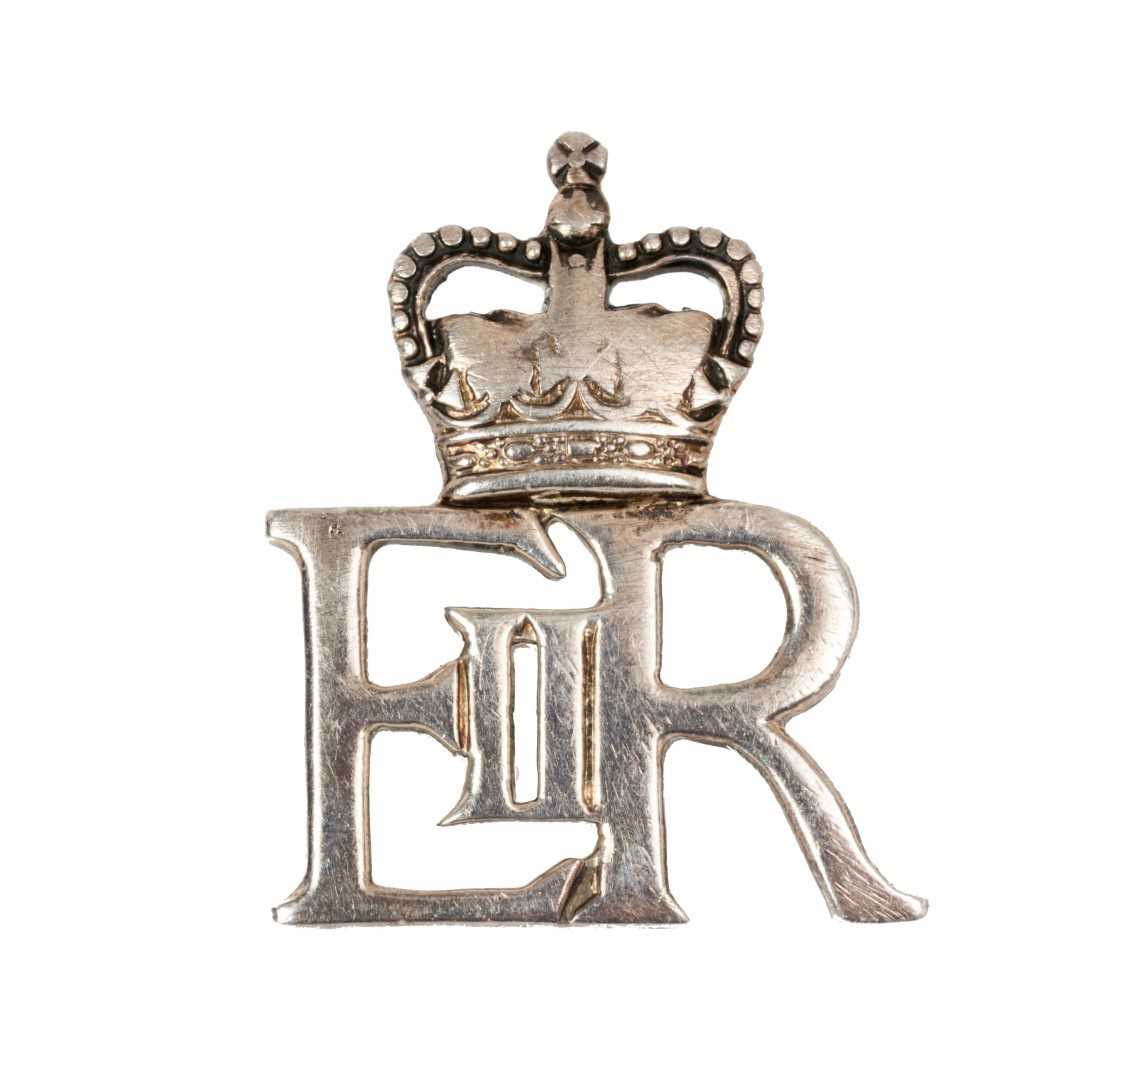 Lot 1 - Rare H.M.Queen Elizabeth II silver chauffeur's badge belonged to Leonard Massey RVM